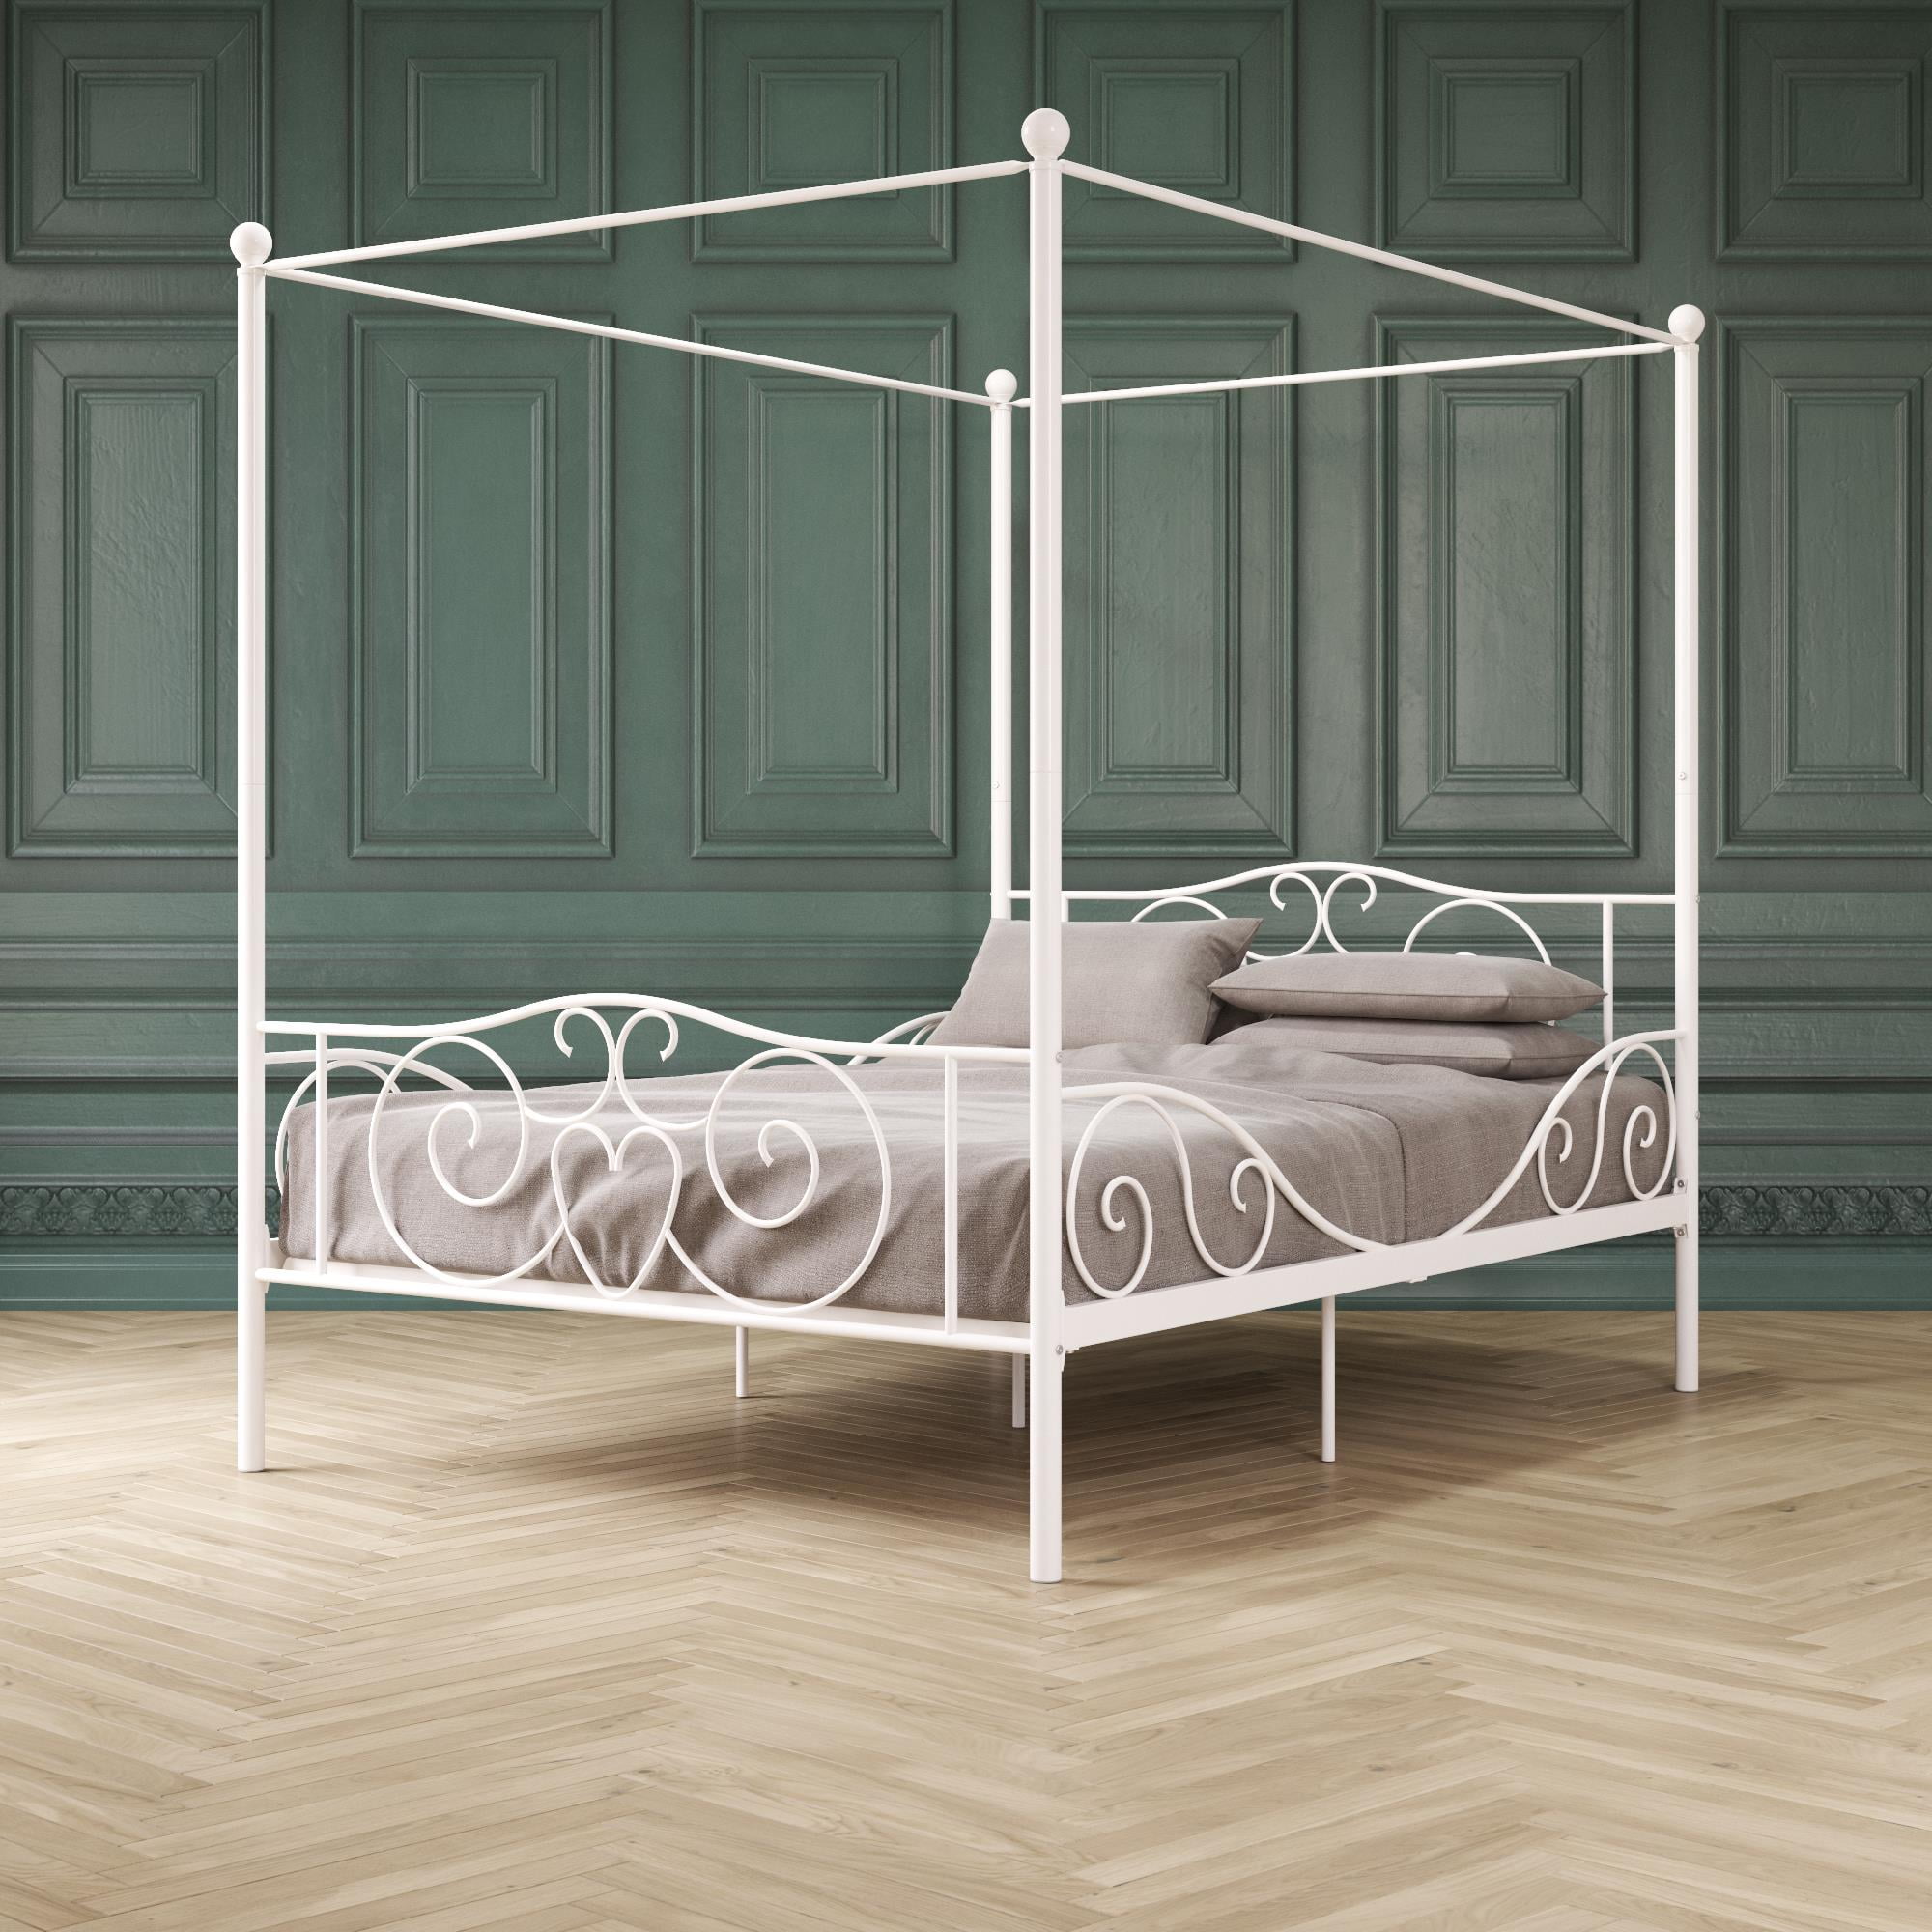 Canopy Bed Frame Full Size Metal Princess Girls Kids Bedroom Furniture White New 